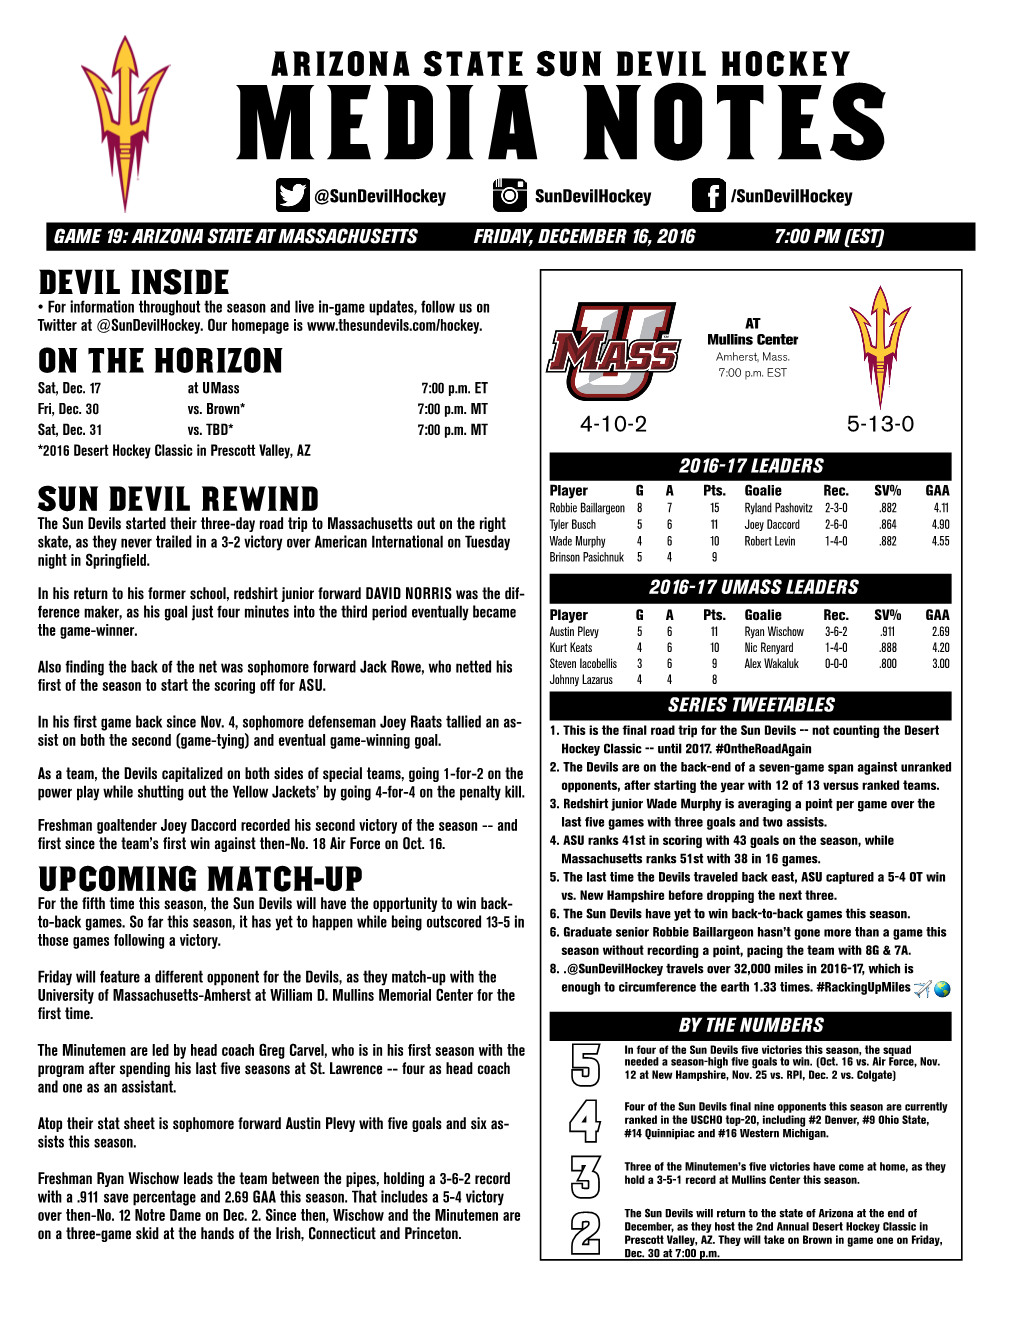 ARIZONA STATE SUN DEVIL HOCKEY MEDIA NOTES @Sundevilhockey Sundevilhockey /Sundevilhockey